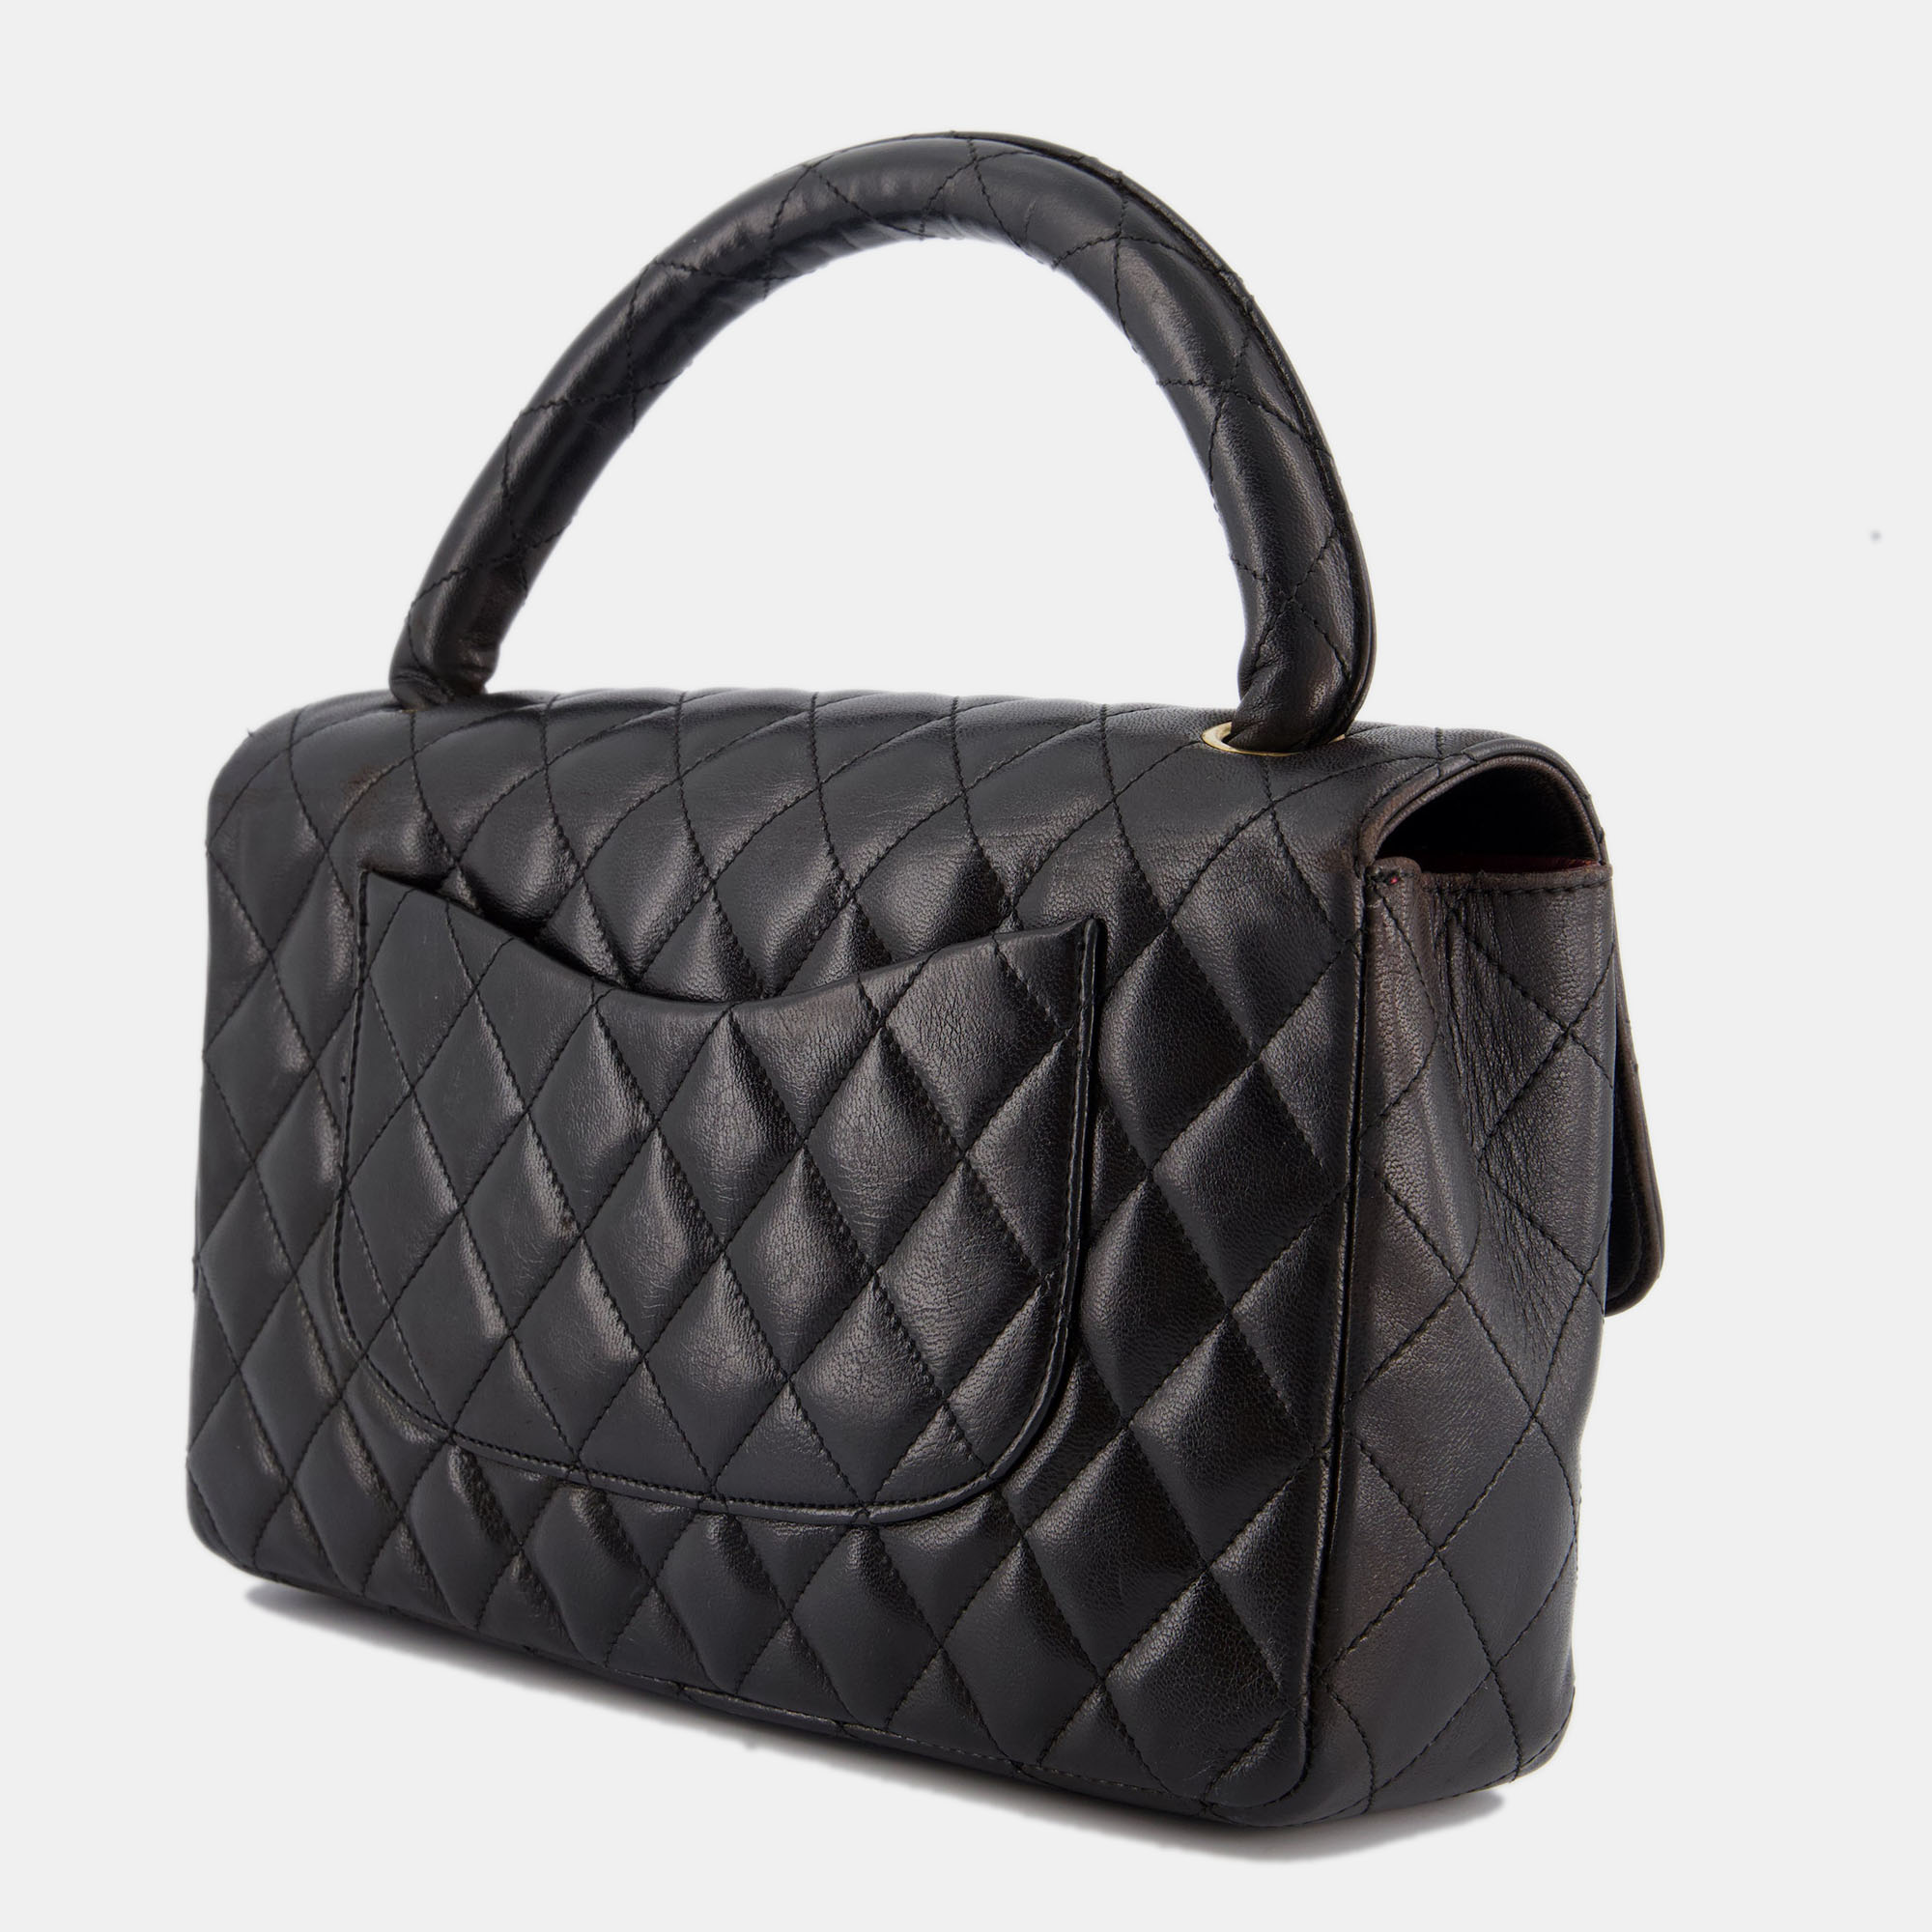 Chanel Black Vintage Lambskin Top Handle Bag With 24K Gold Hardware